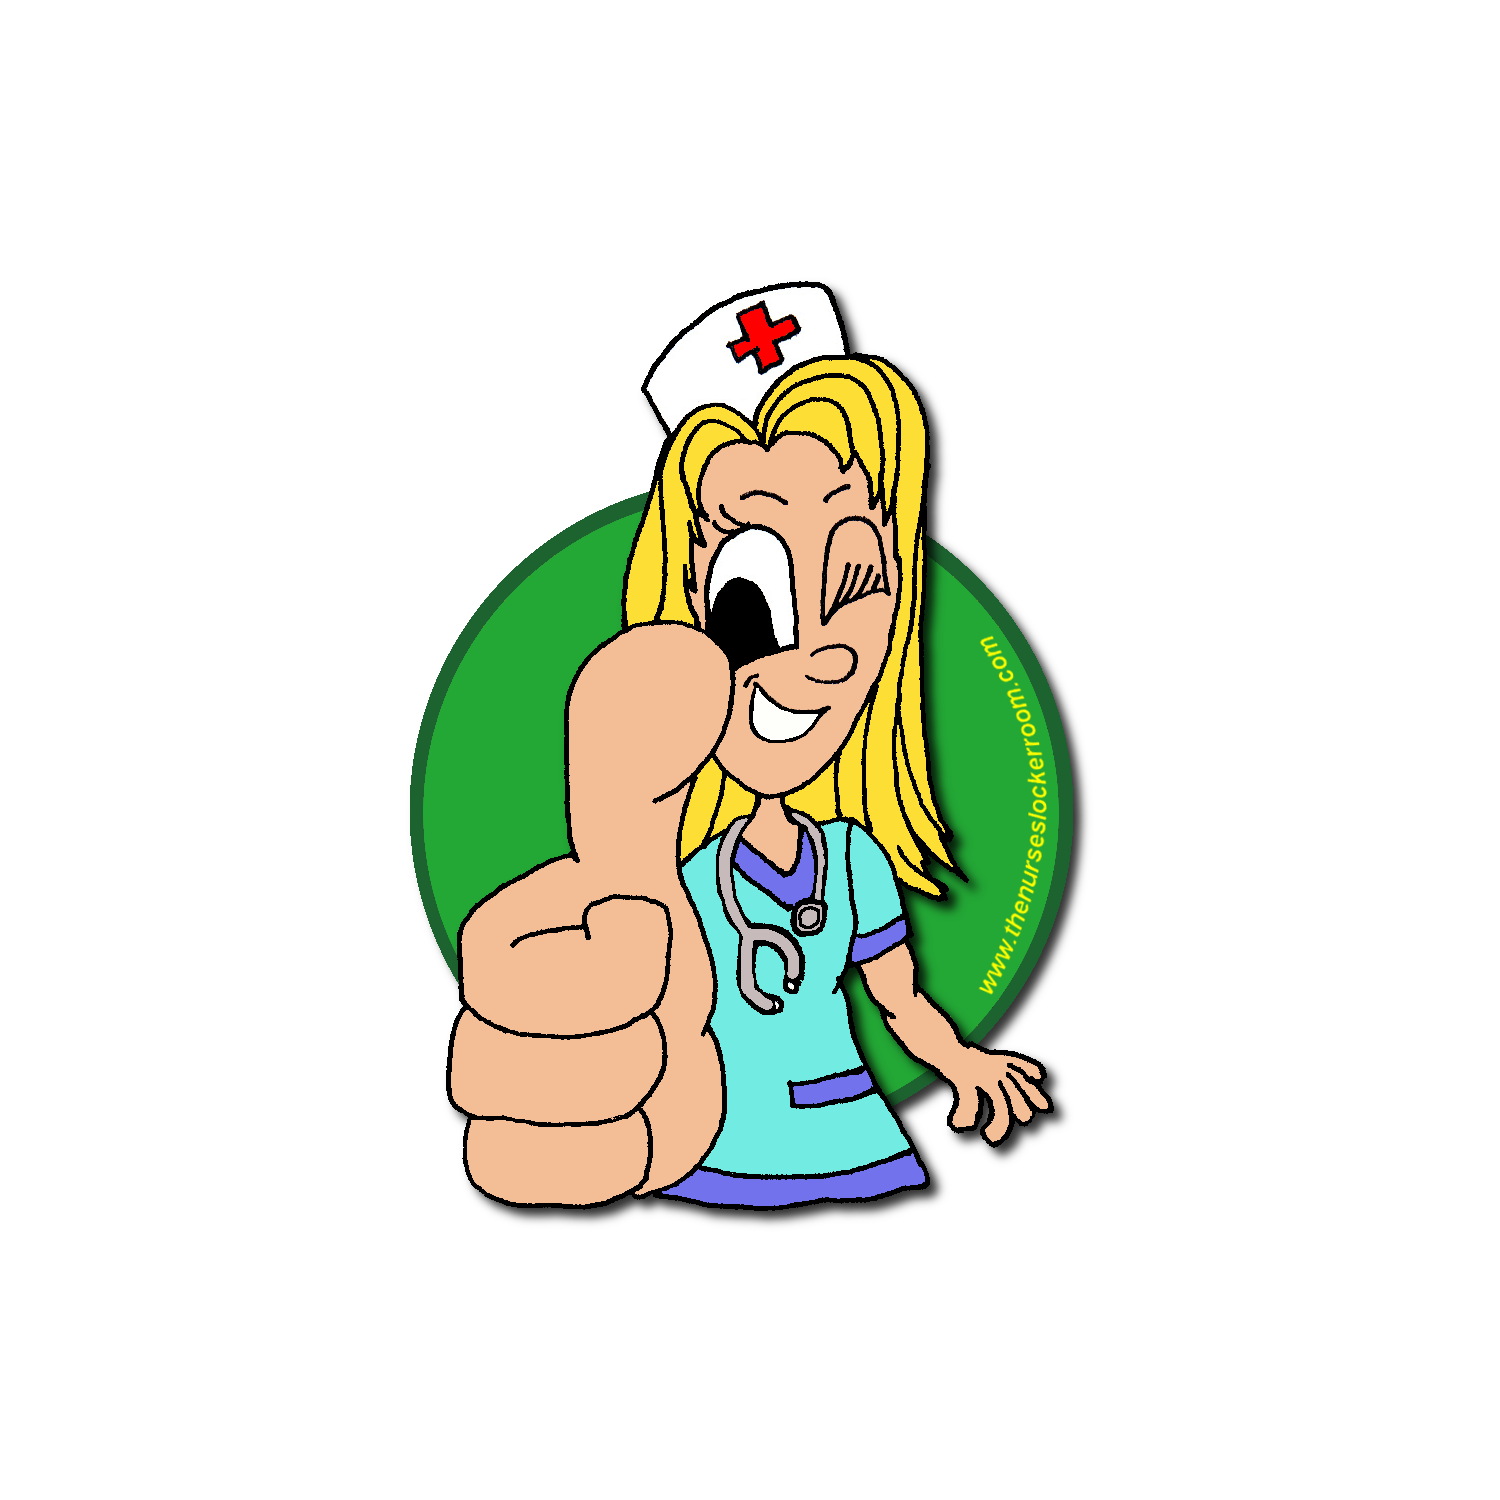 Pin On Nursing Cartoons - Bank2home.com